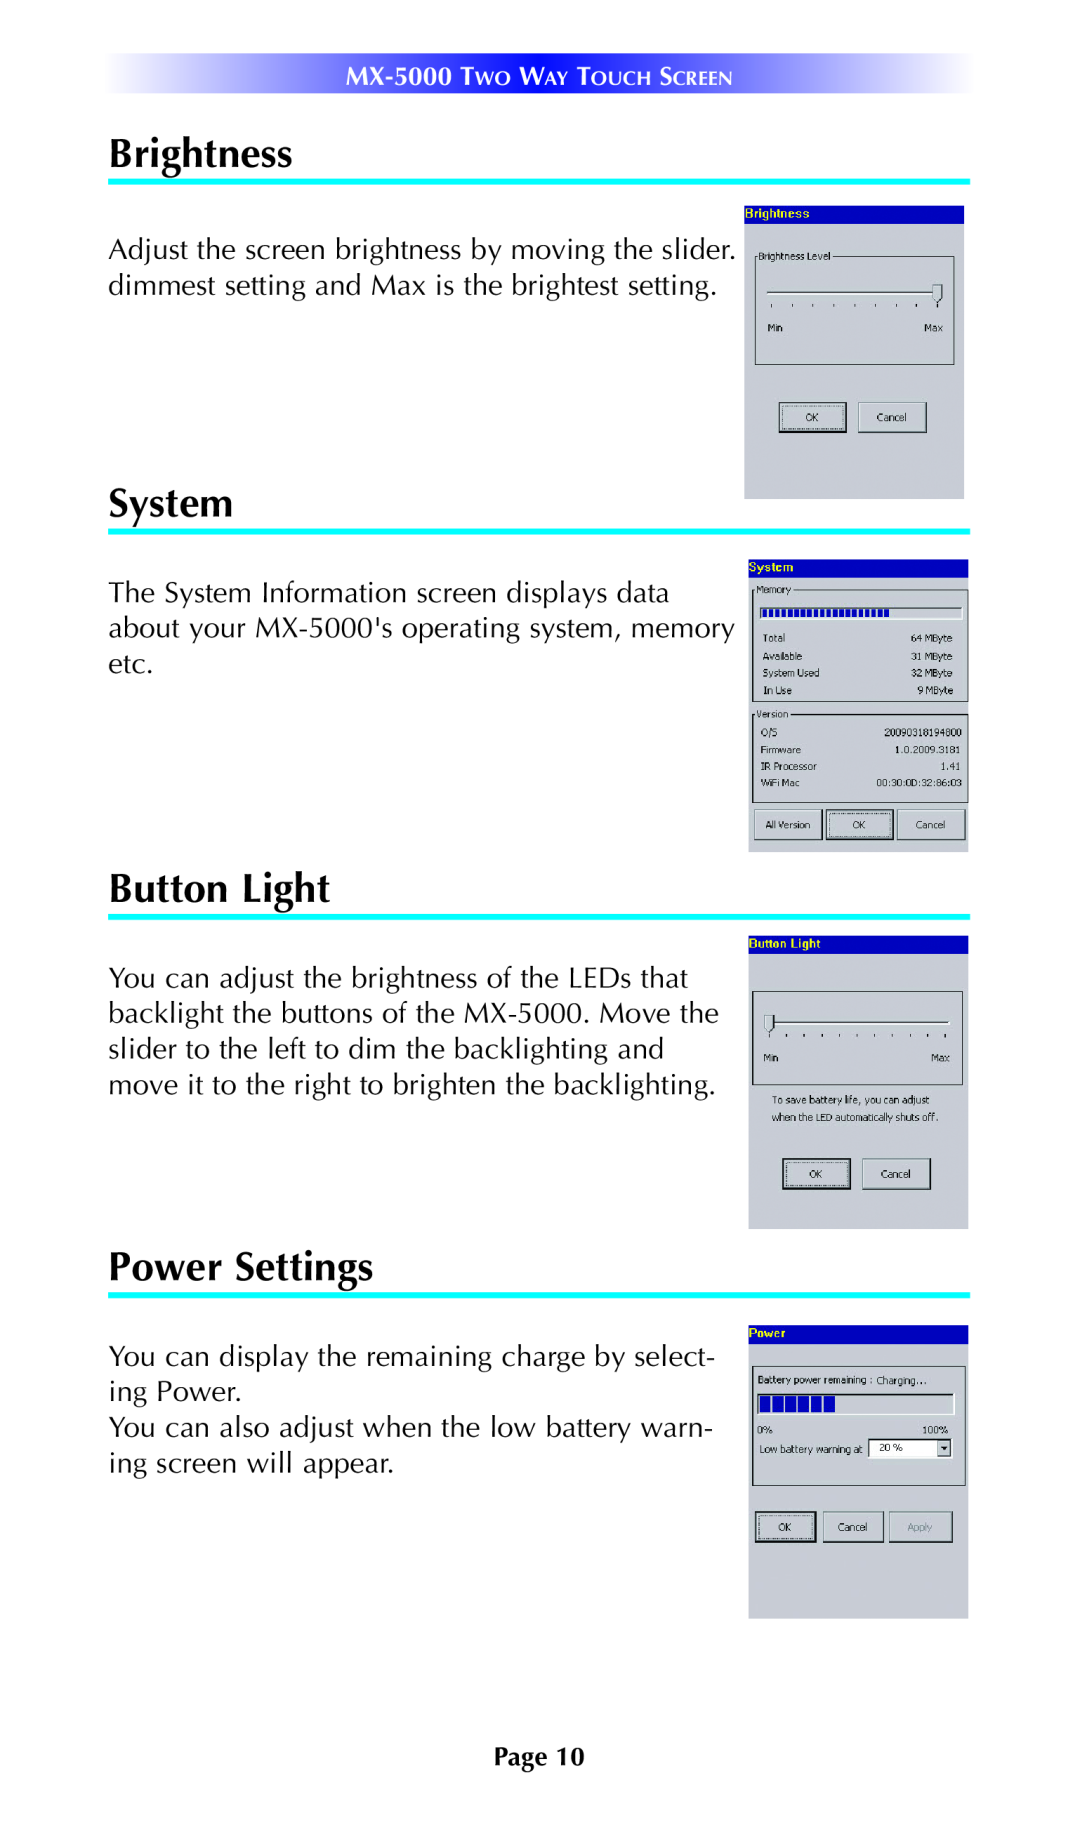 Universal Remote Control MX-5000 manual Brightness, System, Button Light, Power Settings 